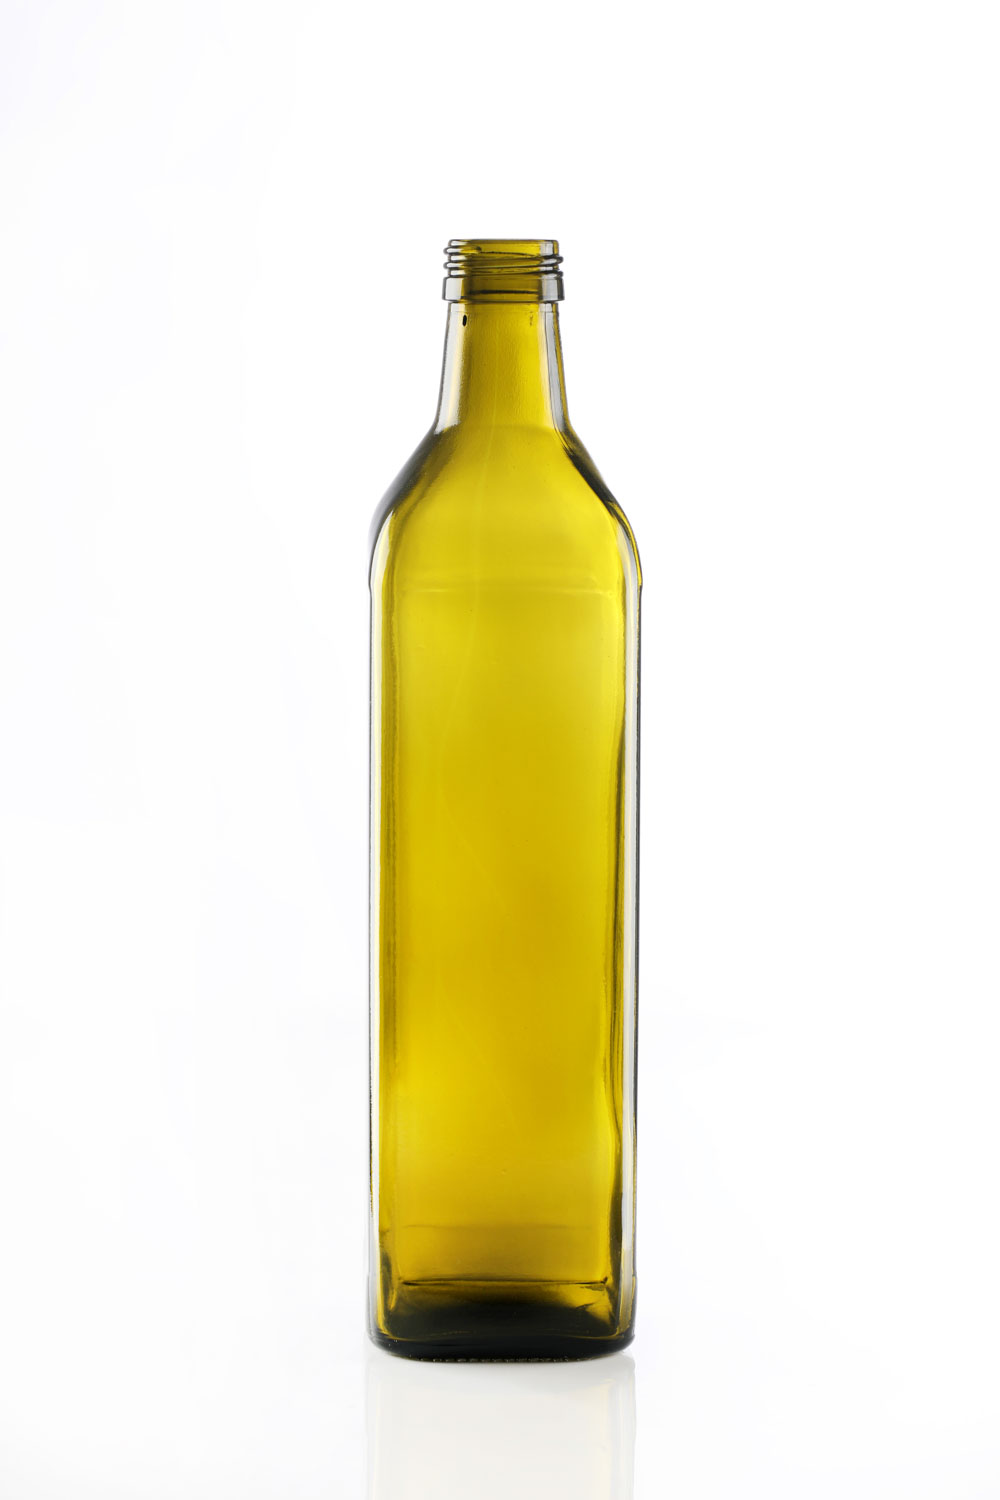 Flasche Maraska / Essig, Öl, Saucen Kollektion / Glassland